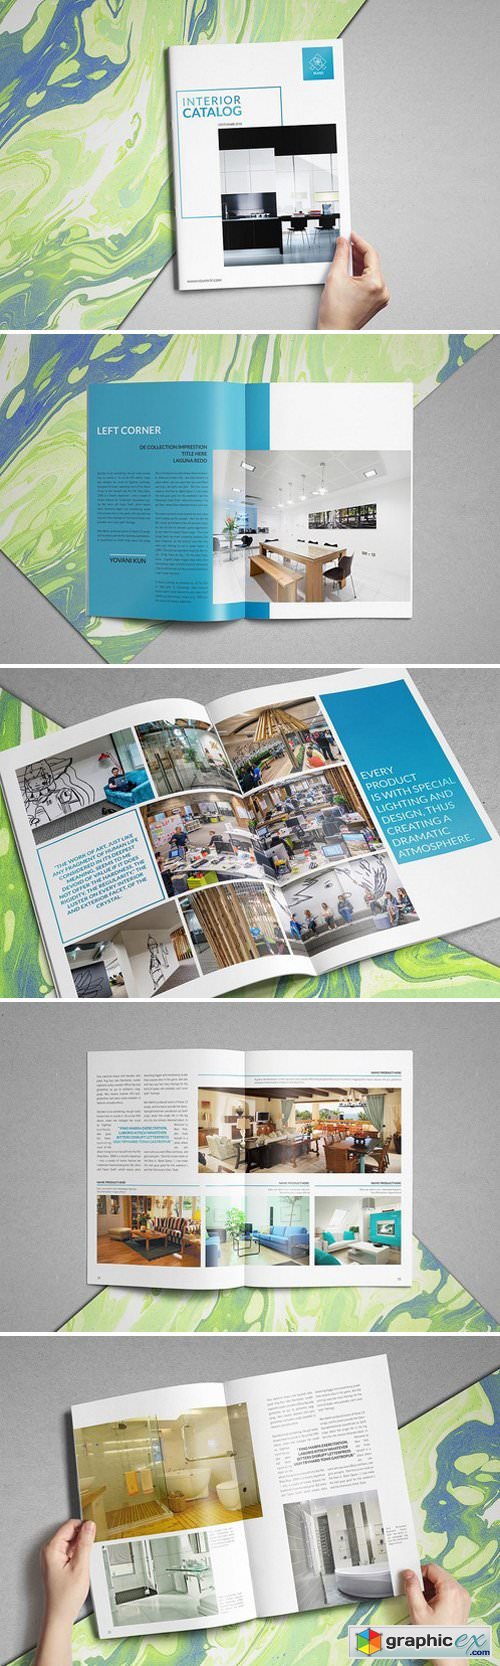 Interior Product Catalogs/Brochure 2225471